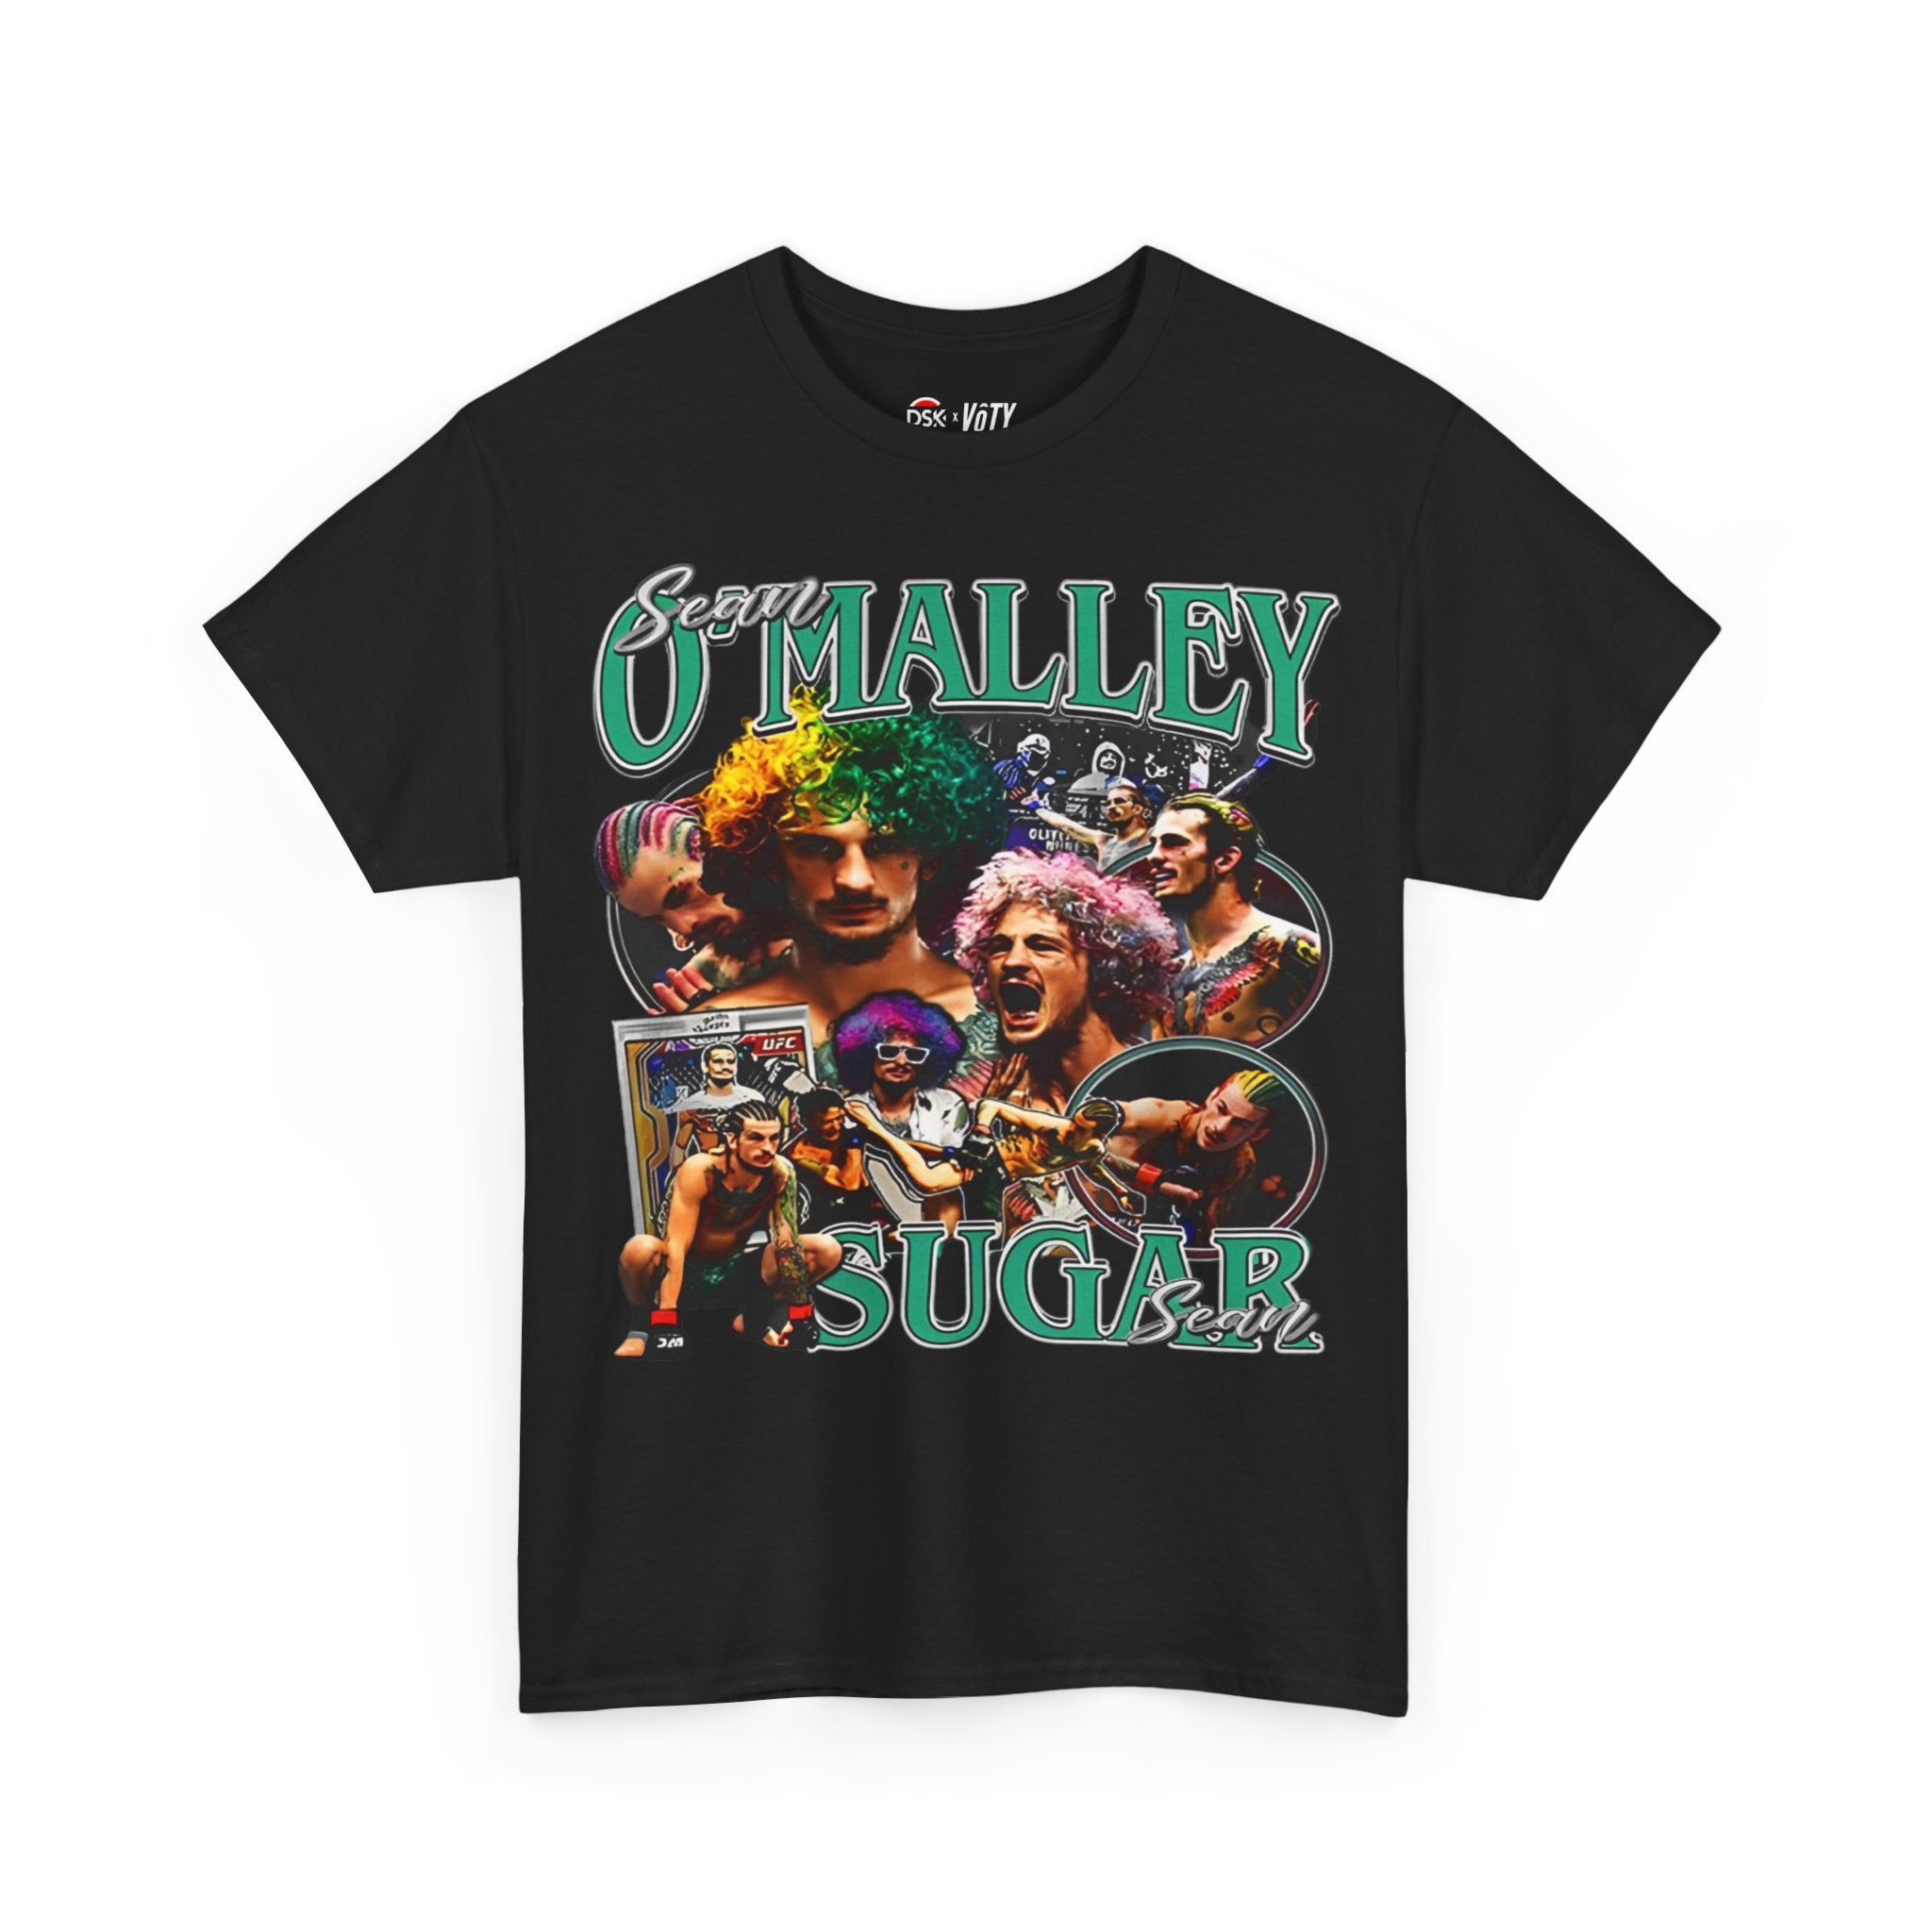 Suga Sean O'Malley T-Shirt